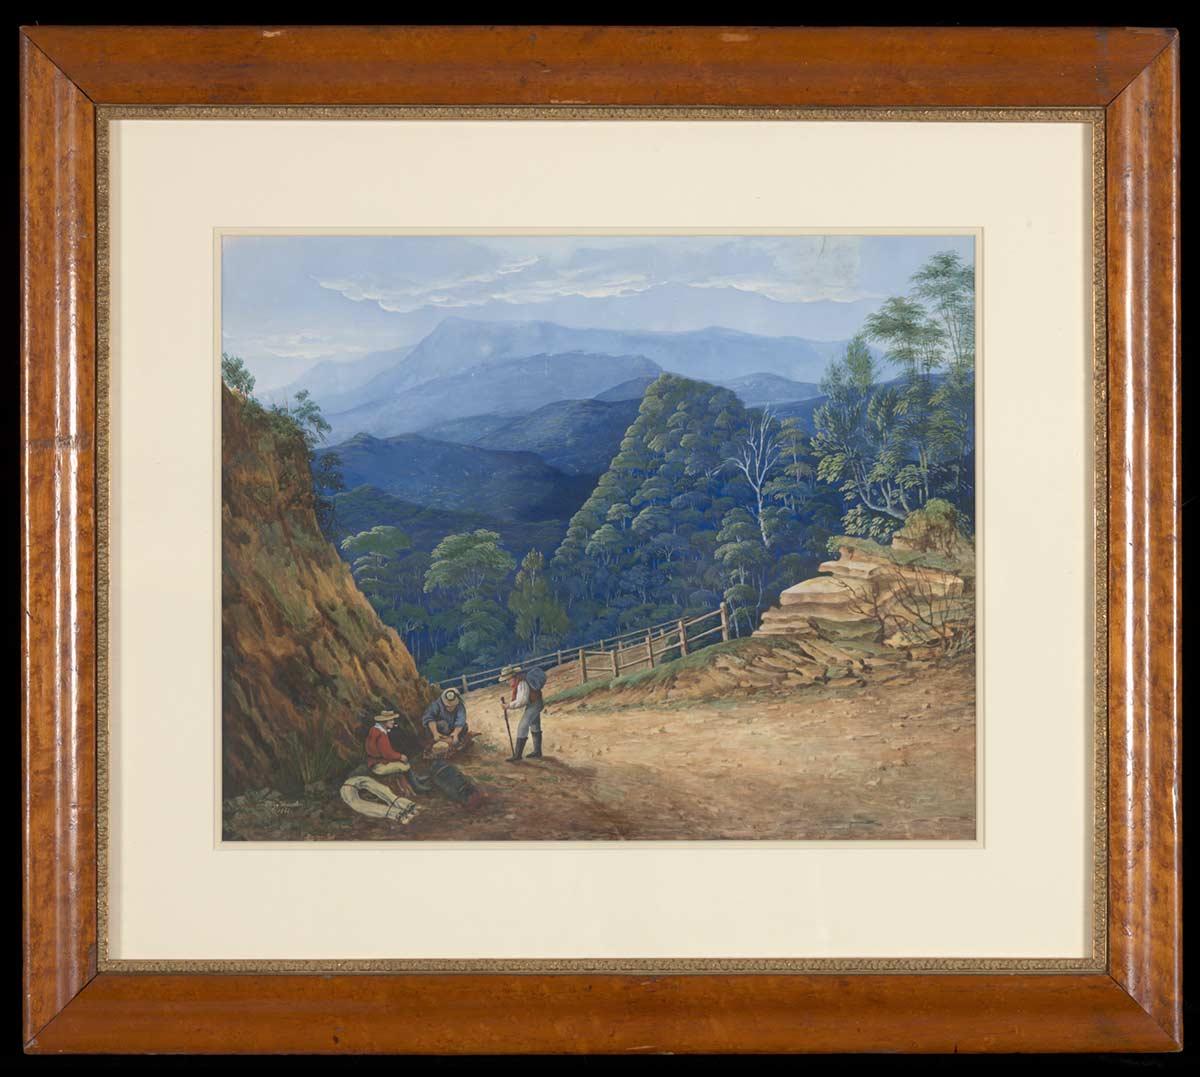 Painting of a mountainous landscape.